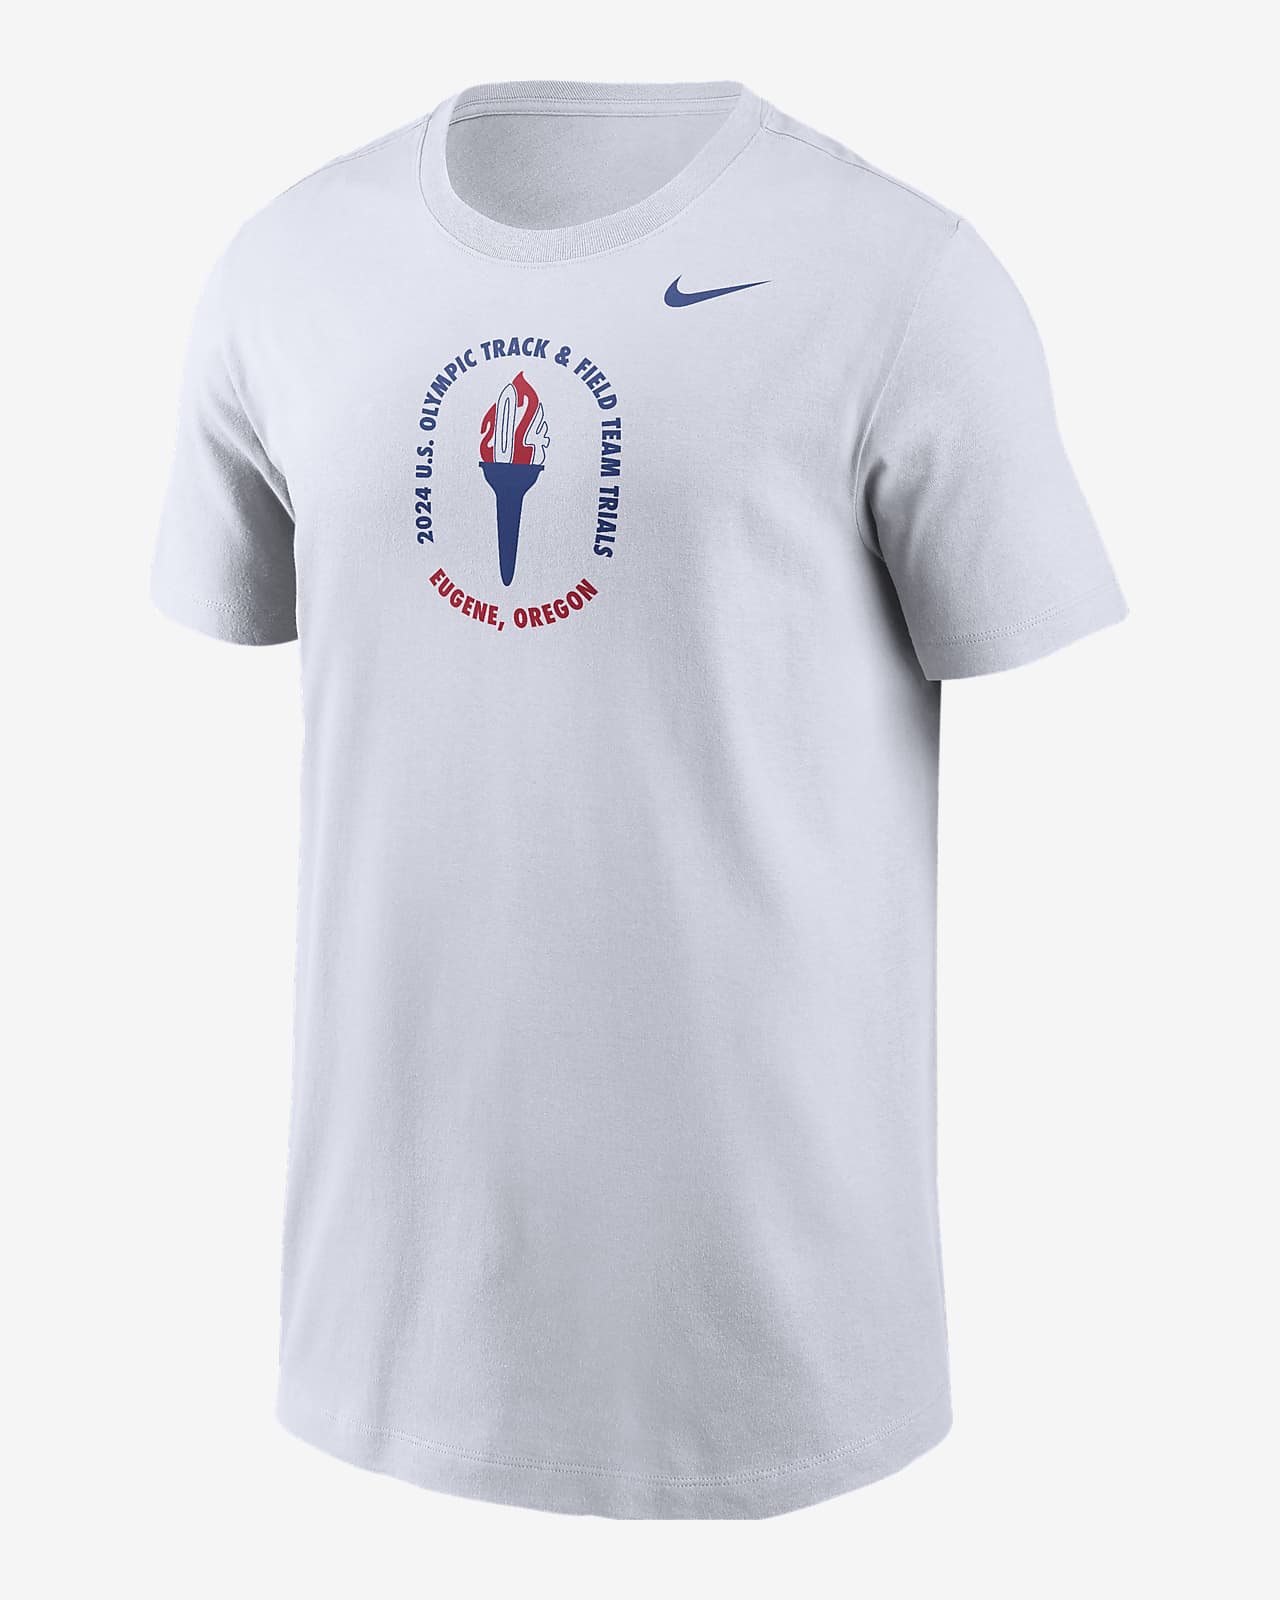 USATF Big Kid's Nike Running T-Shirt